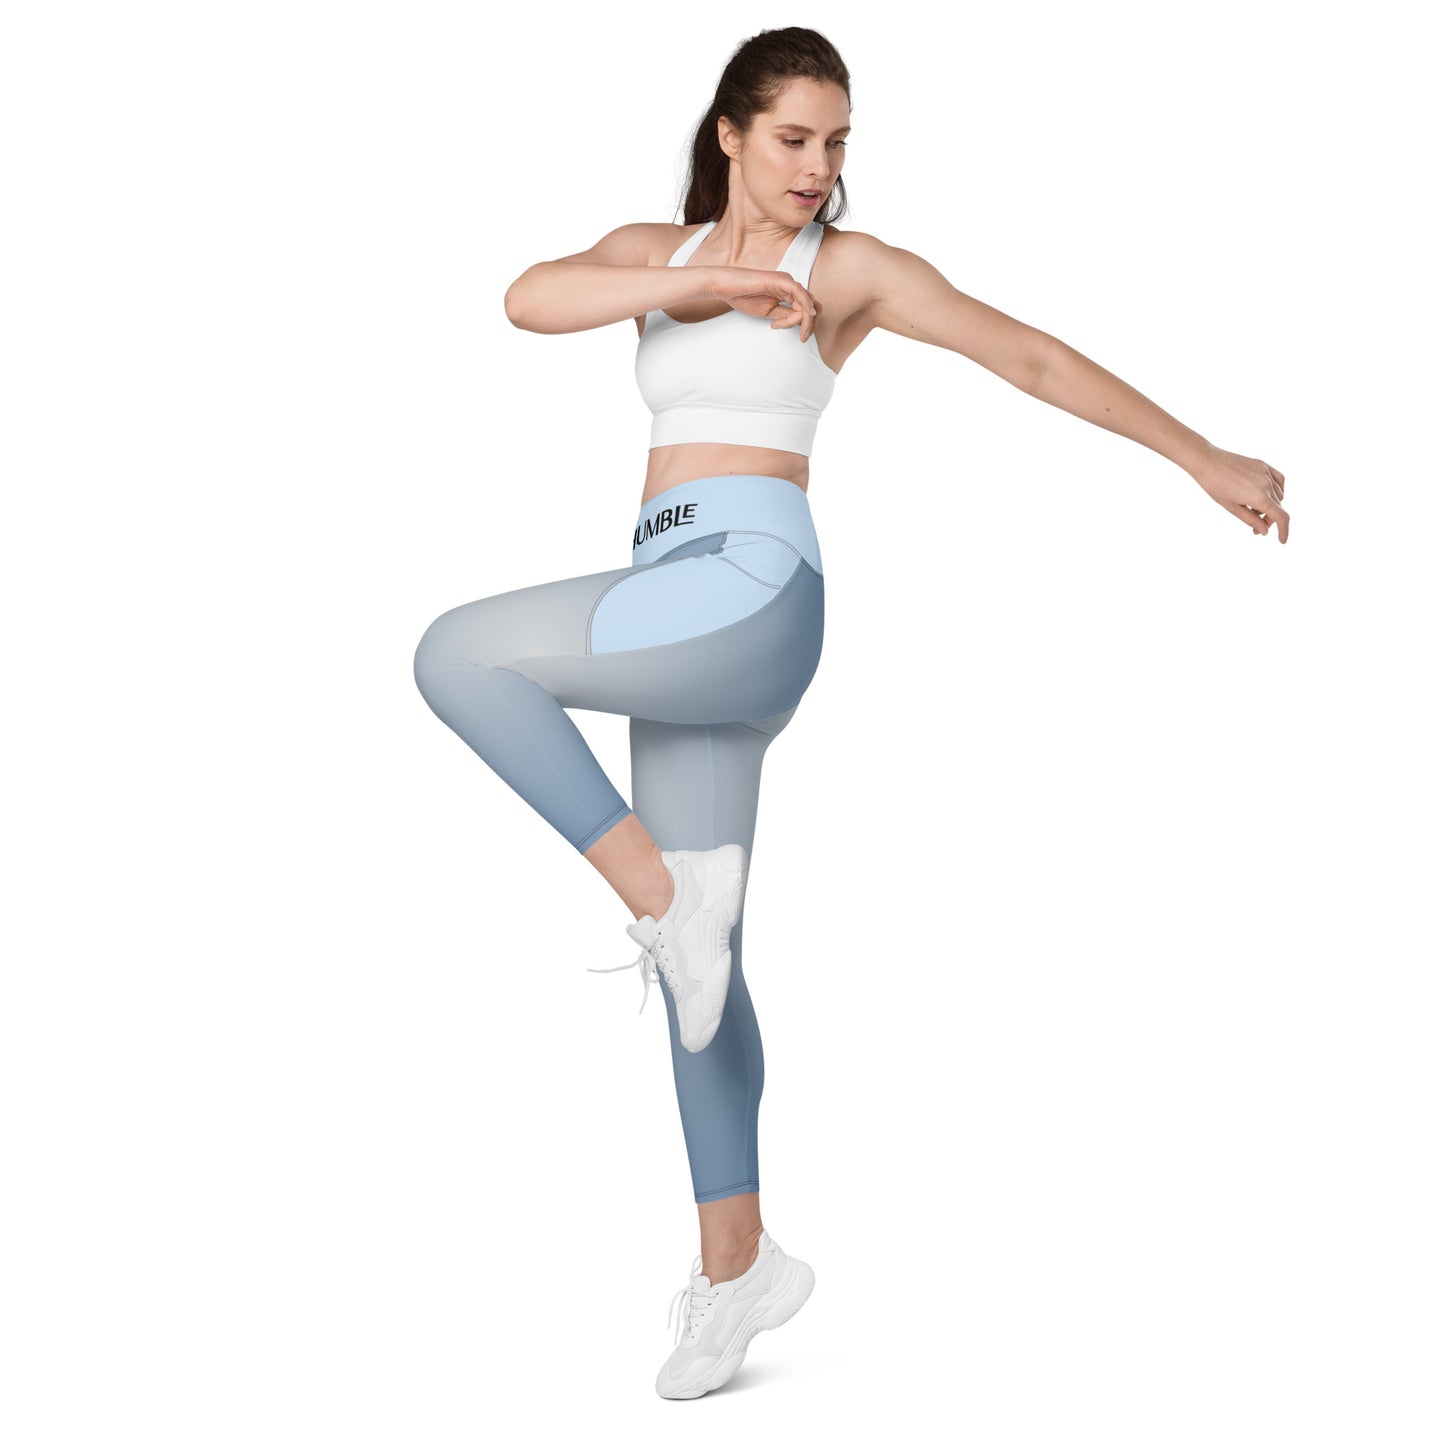 Humble Sportswear™ Women’s Frost Blue Active Compression Leggings - Mireille Fine Art